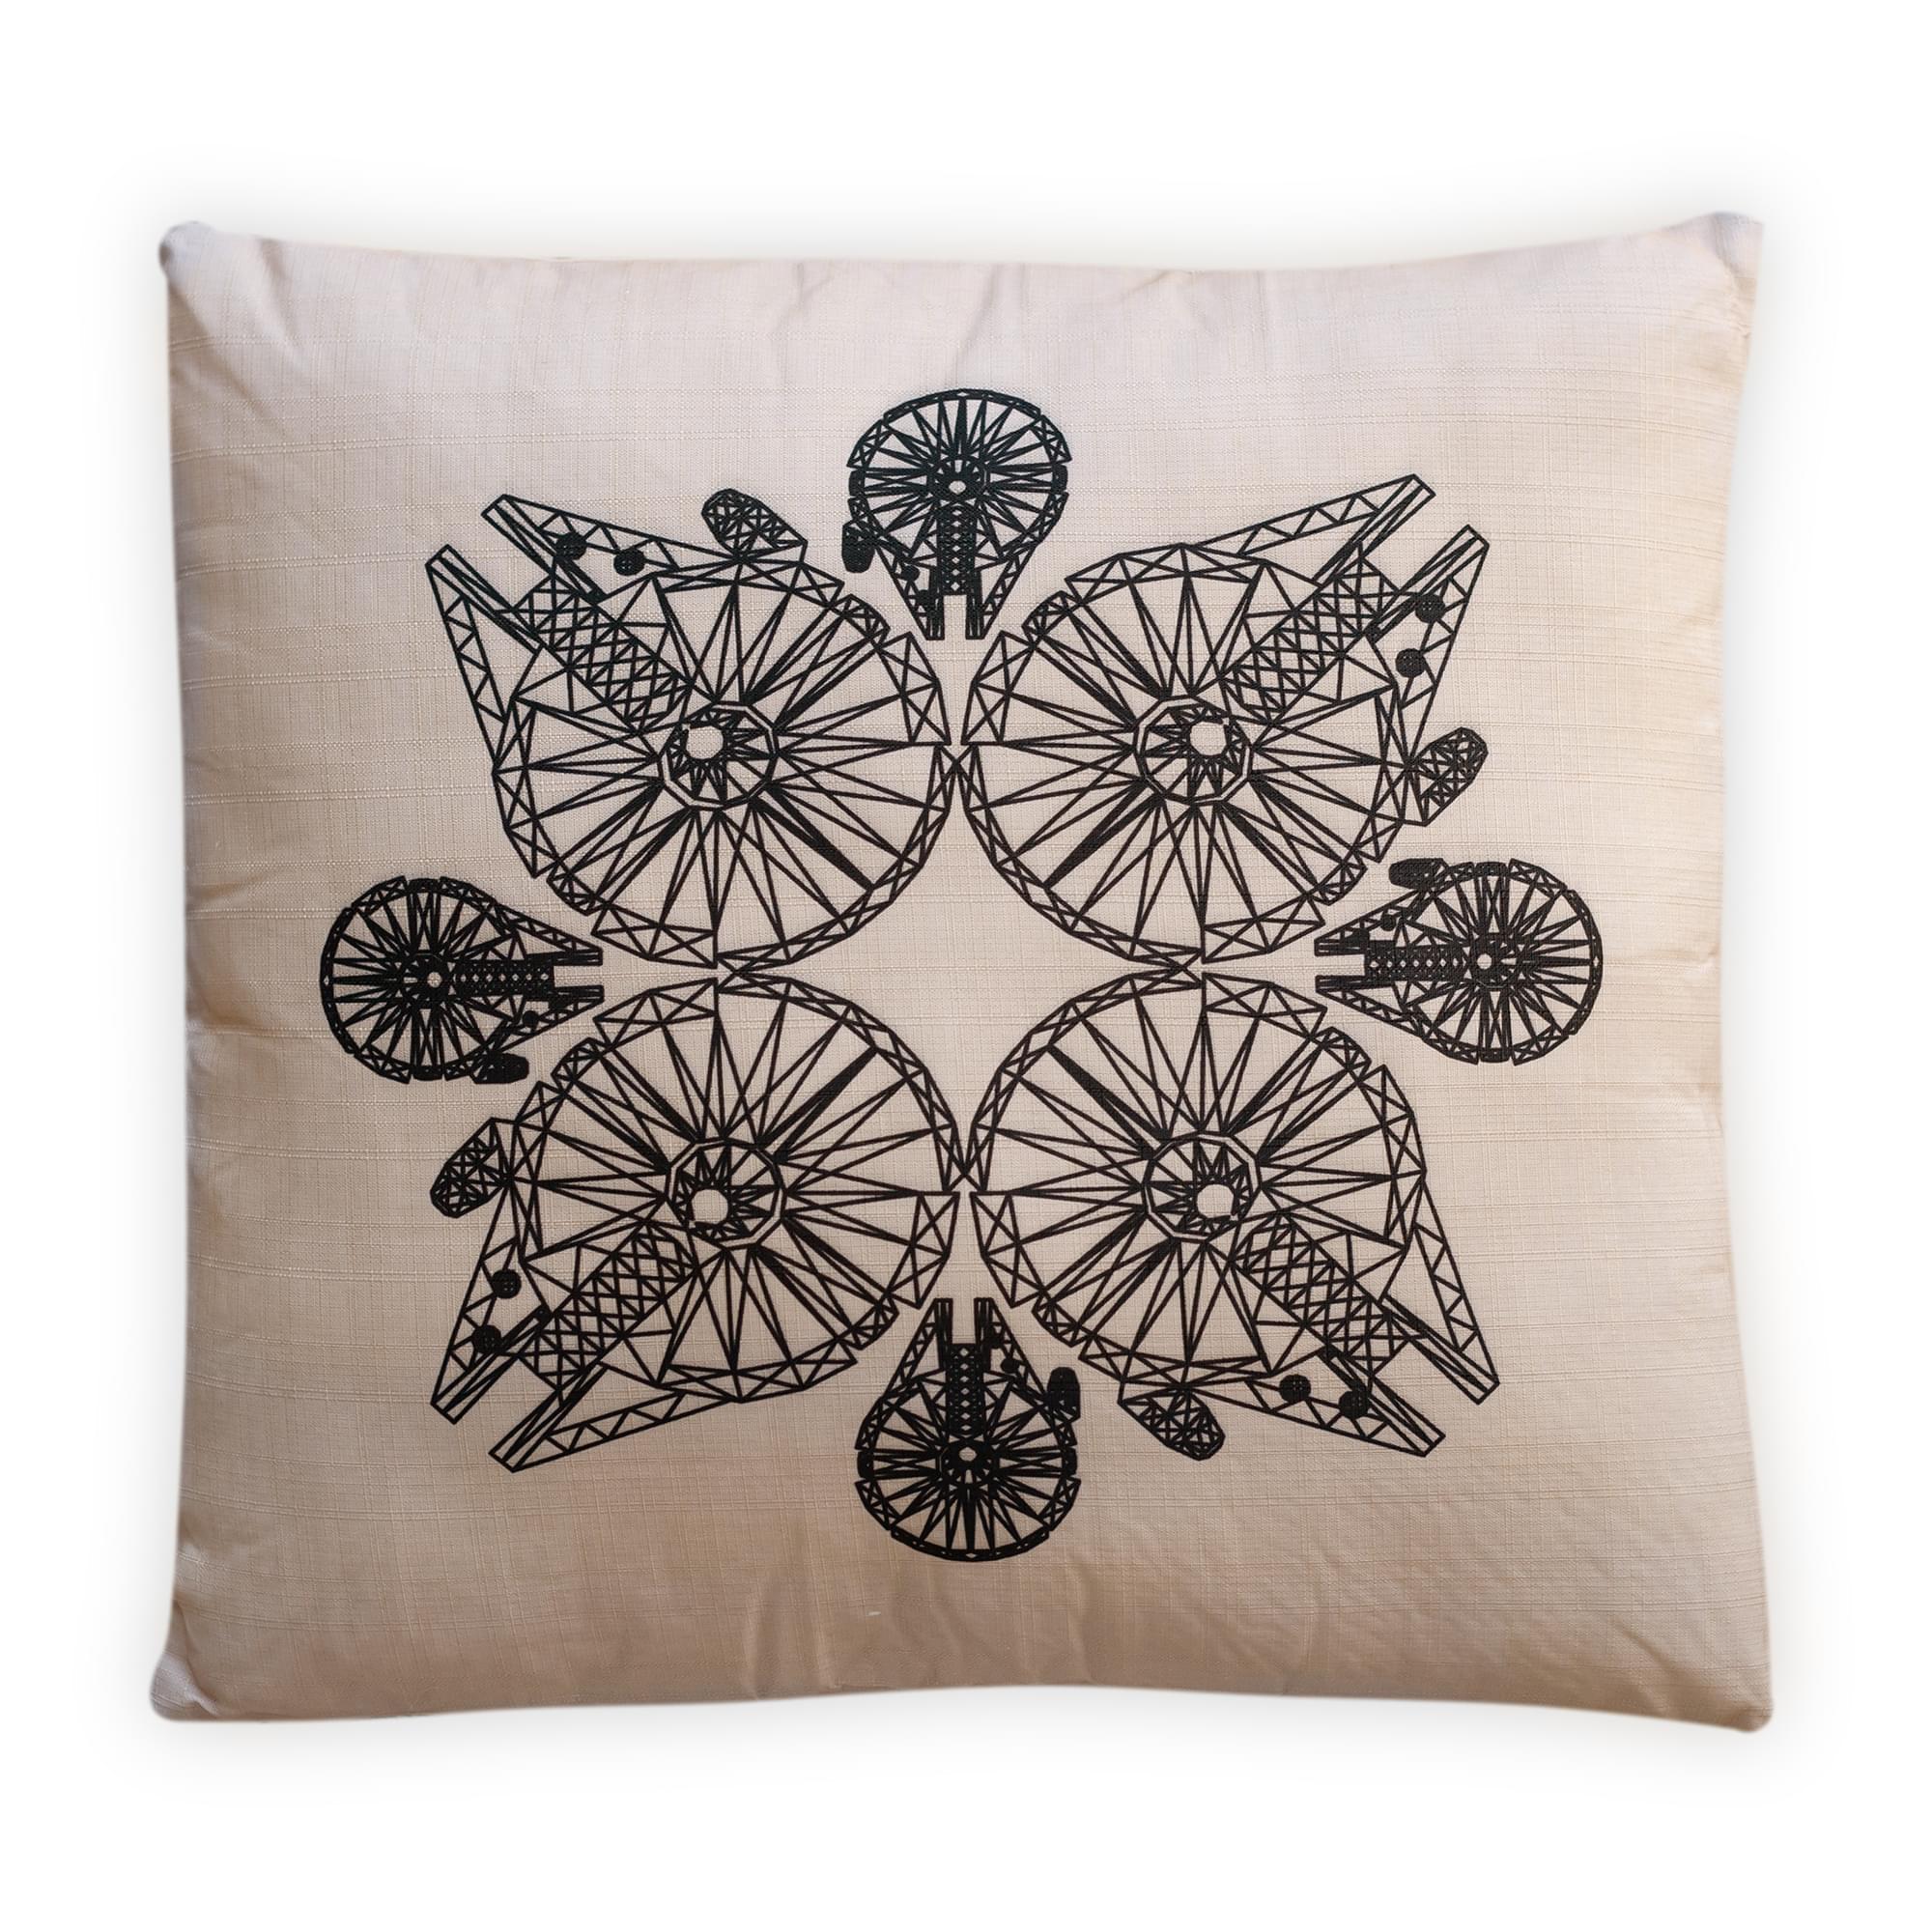 Star Wars Decorative Throw Pillow , Millennium Falcon Pattern , 20 X 20 Inches